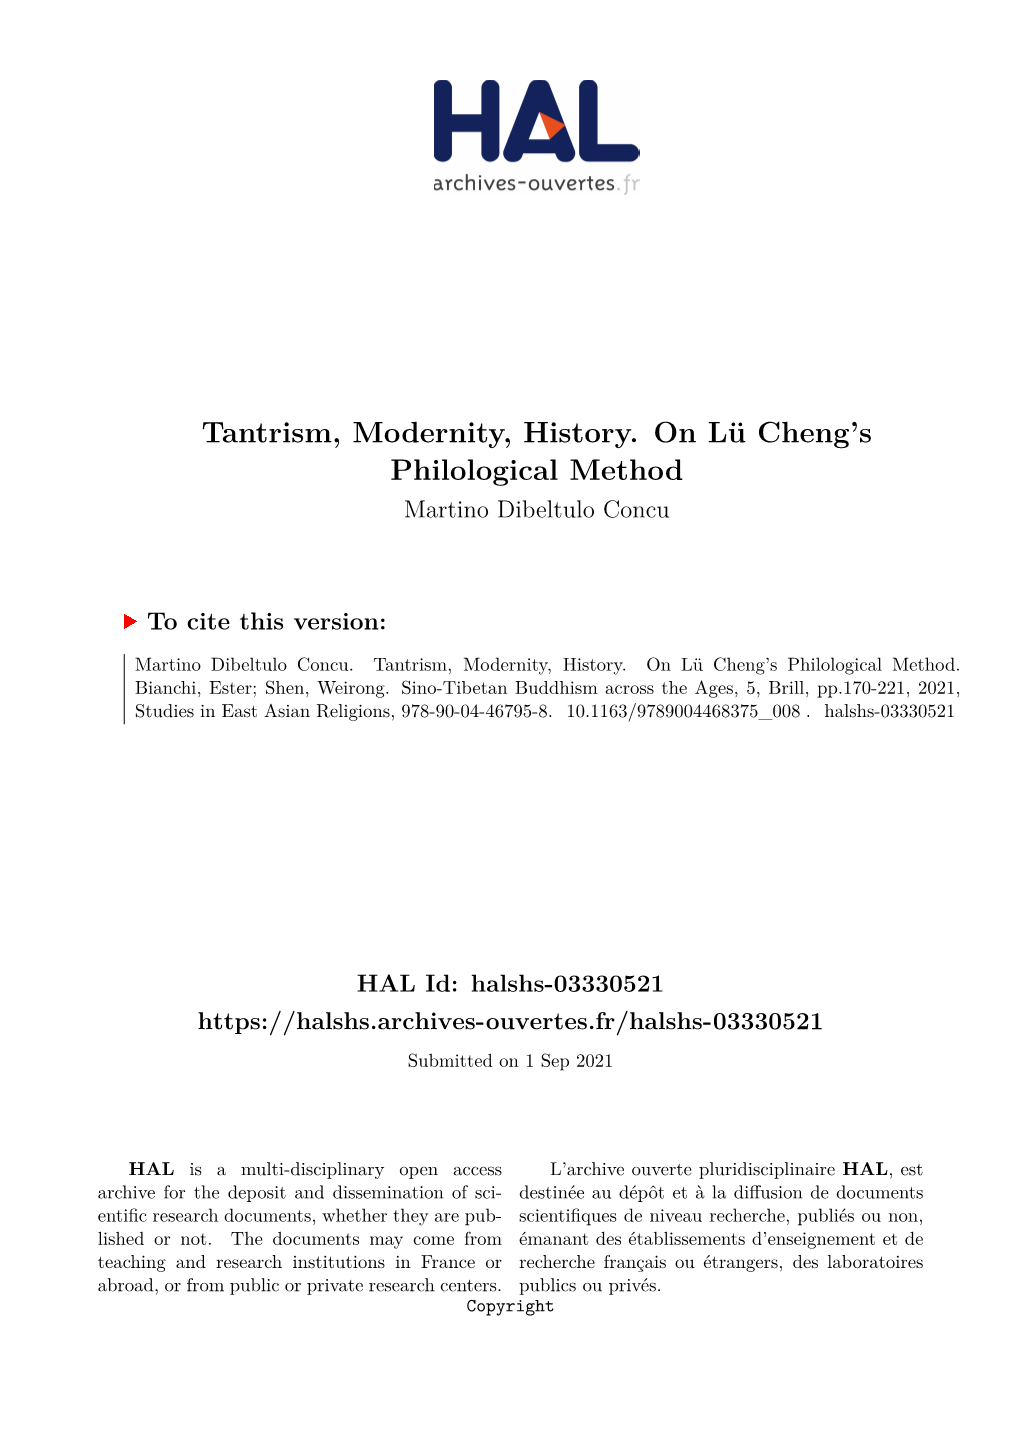 Tantrism, Modernity, History. on Lü Cheng's Philological Method